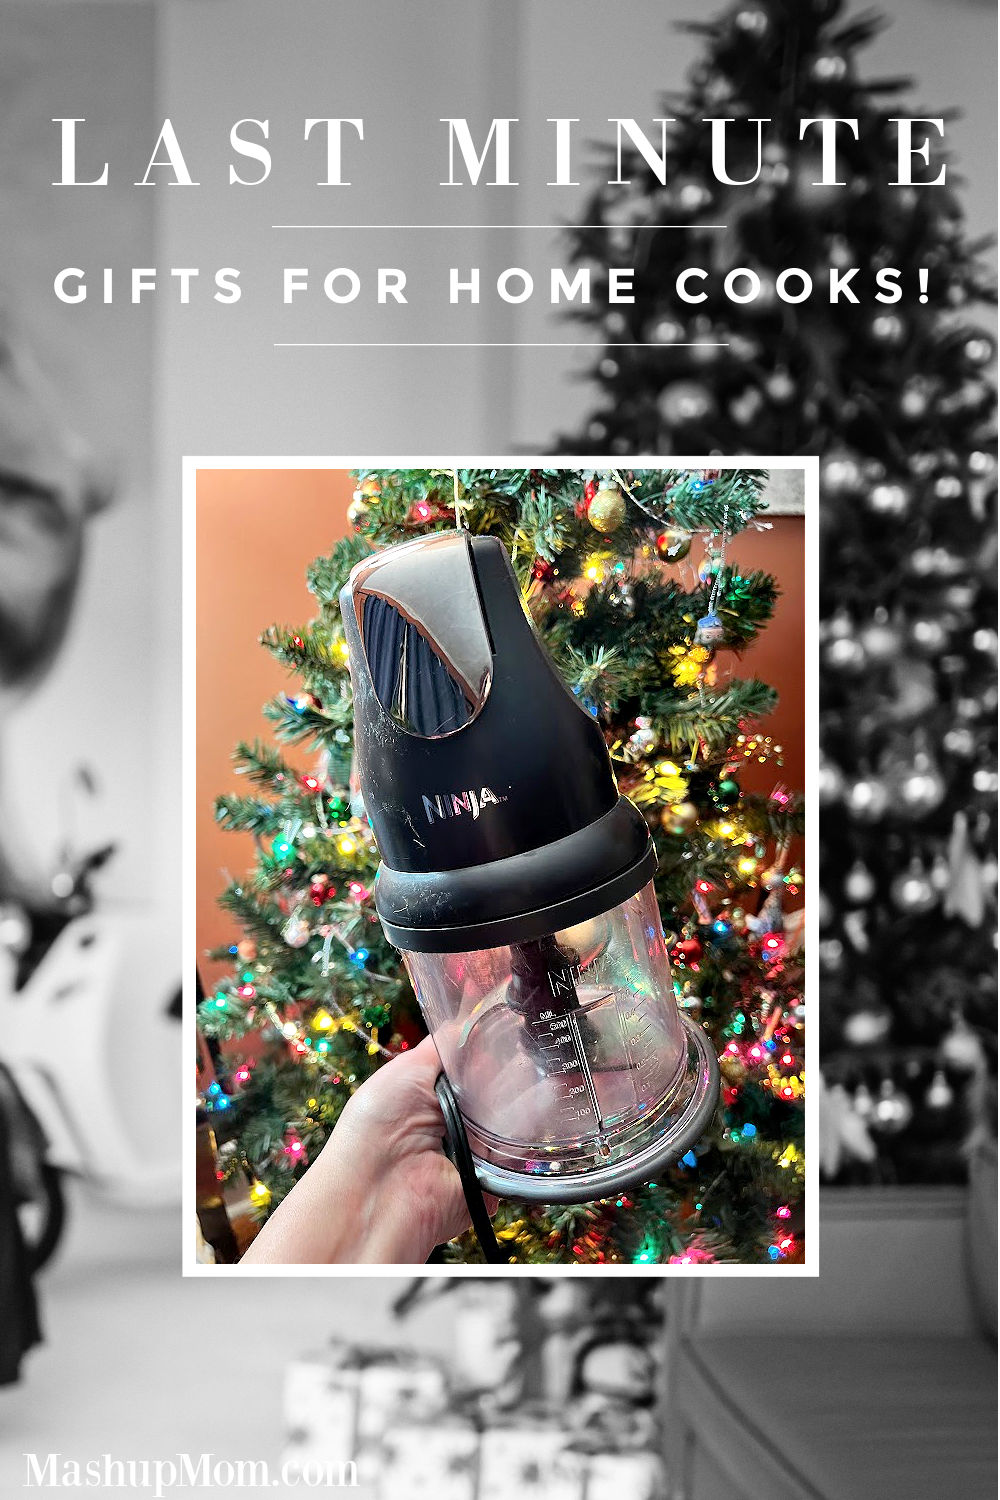 https://www.mashupmom.com/wp-content/uploads/2021/12/last-minute-gifts-for-home-cooks.jpg